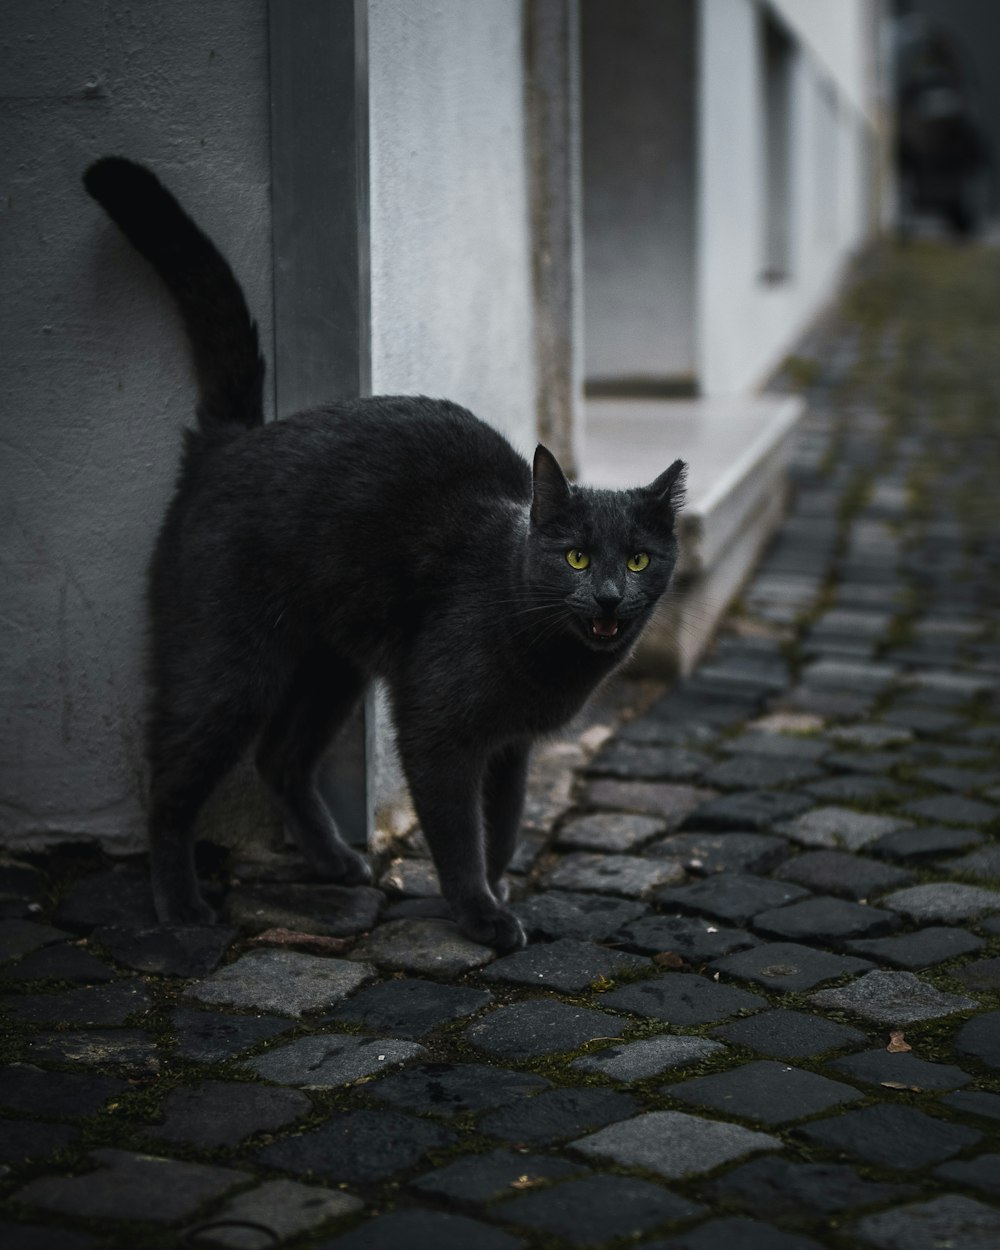 black cat walking on brick floor during daytime